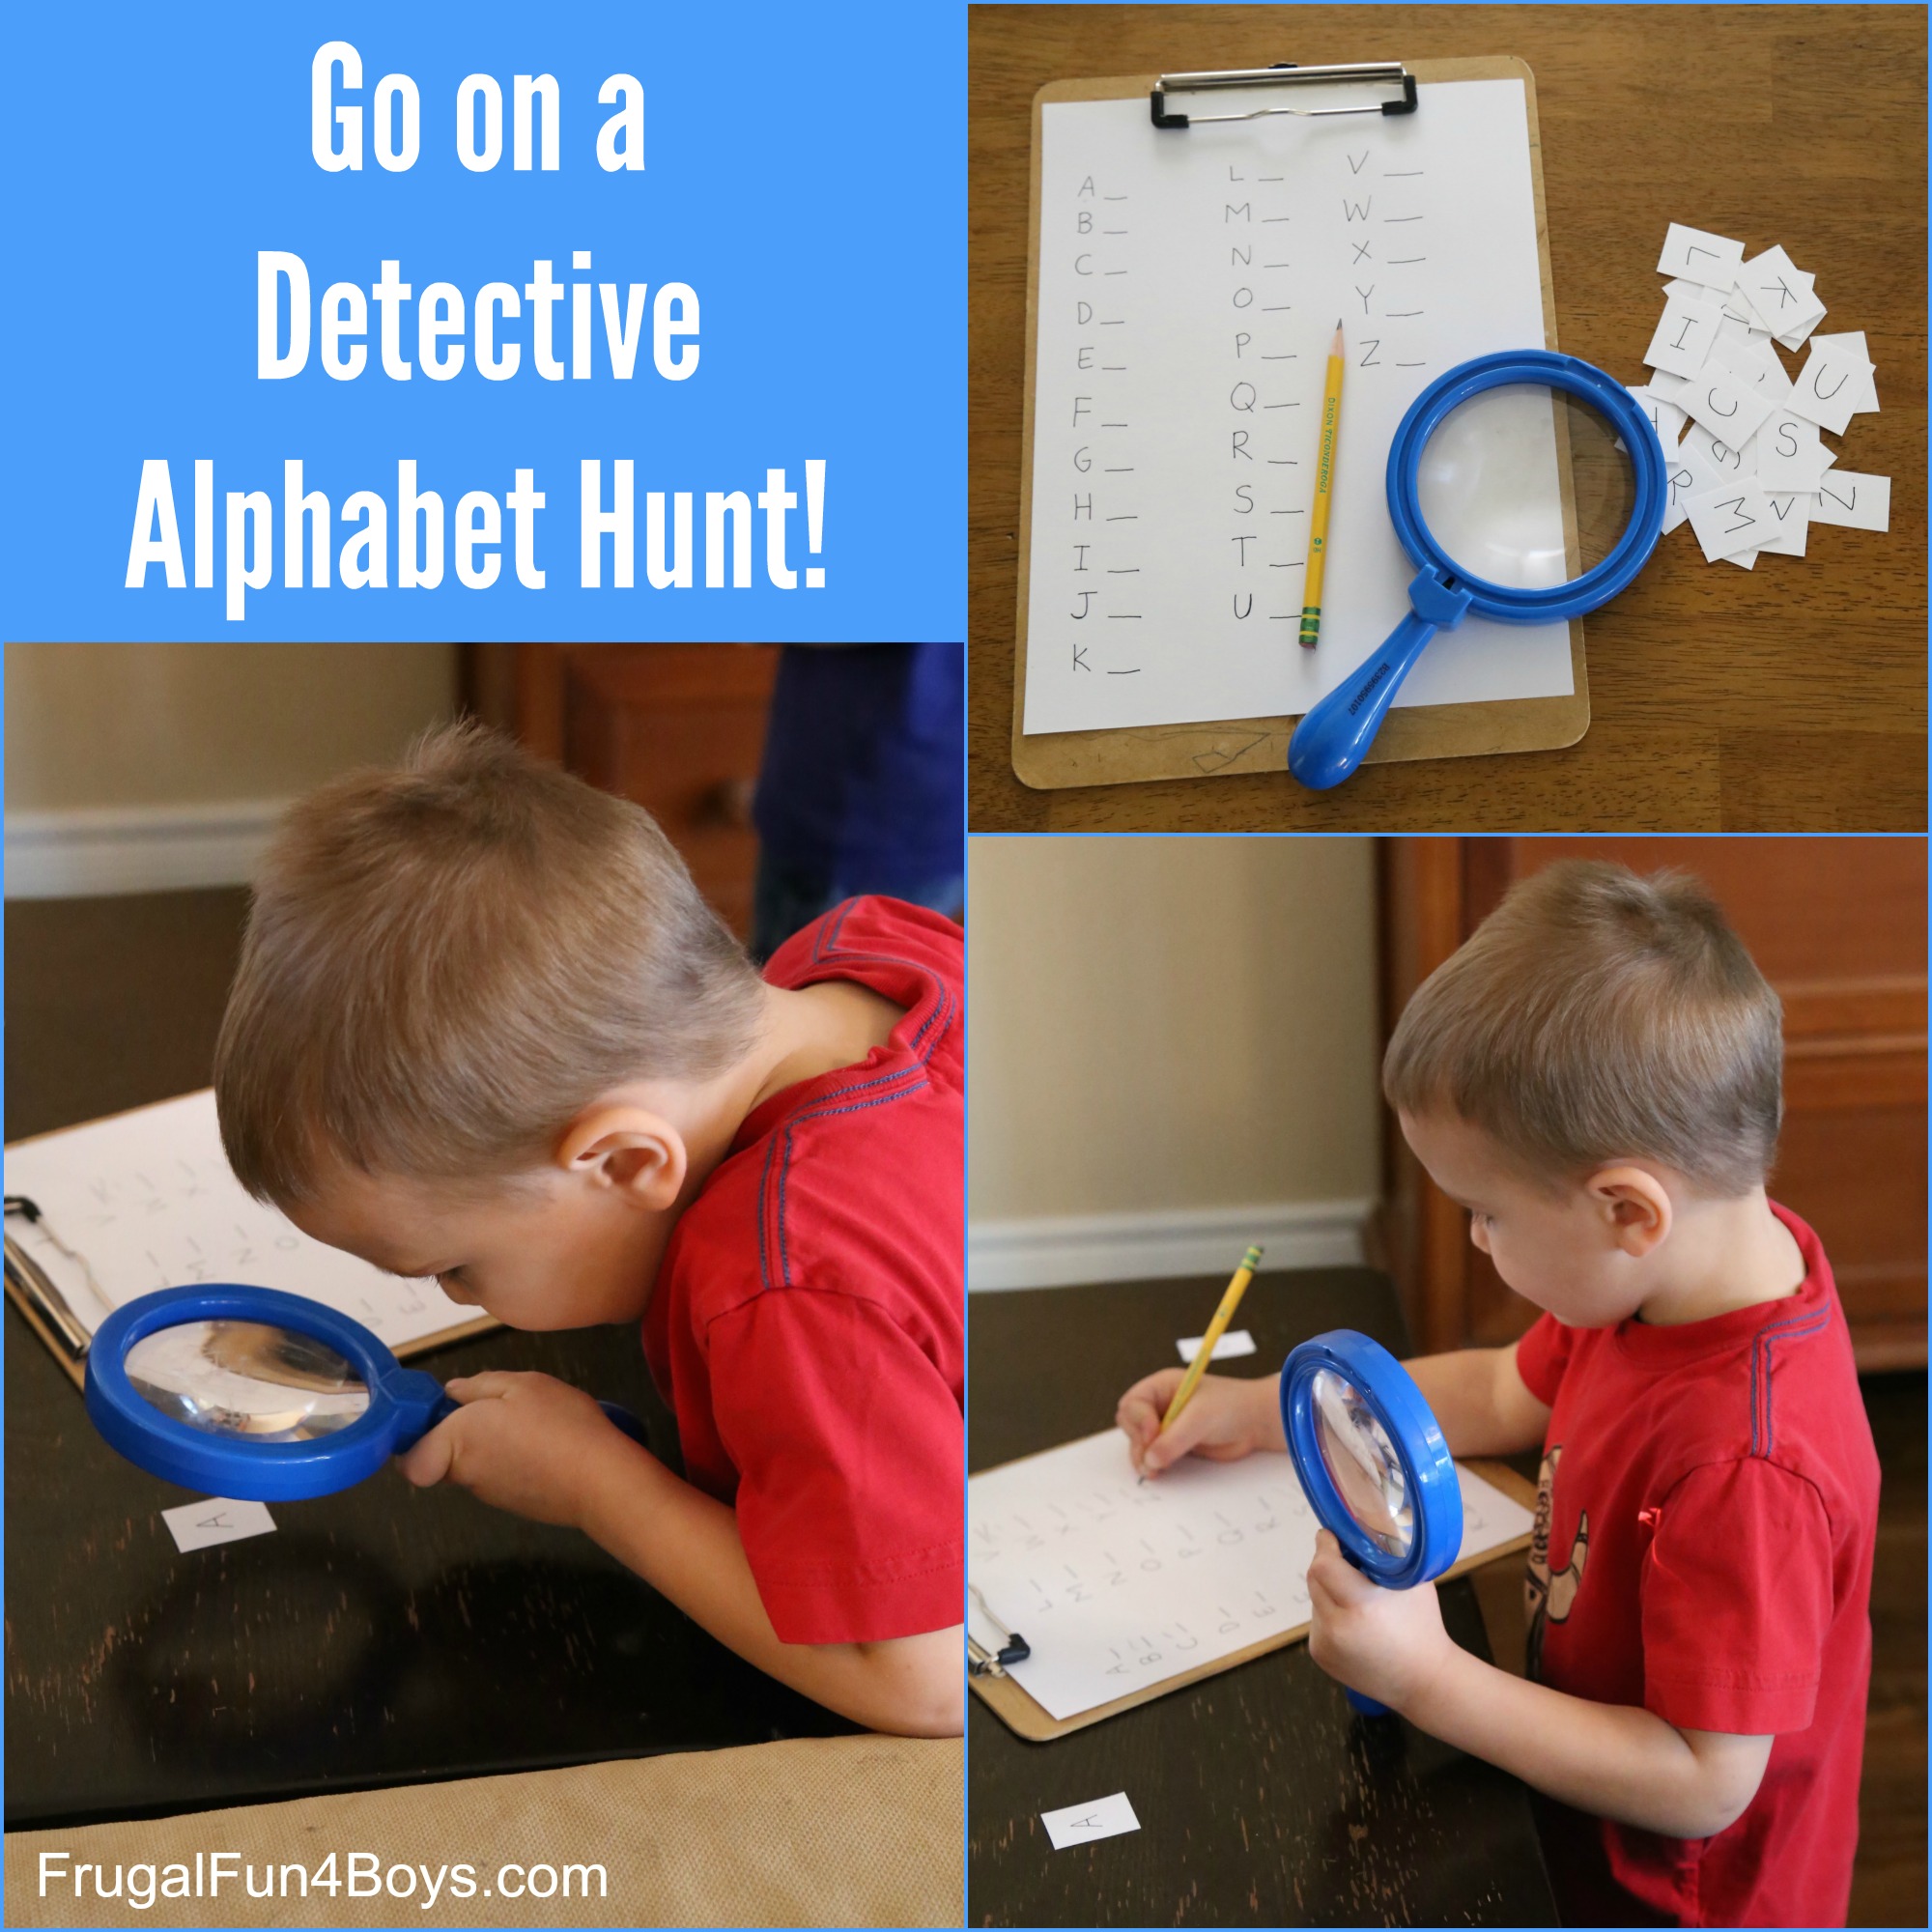 Go on a Detective Alphabet Hunt!